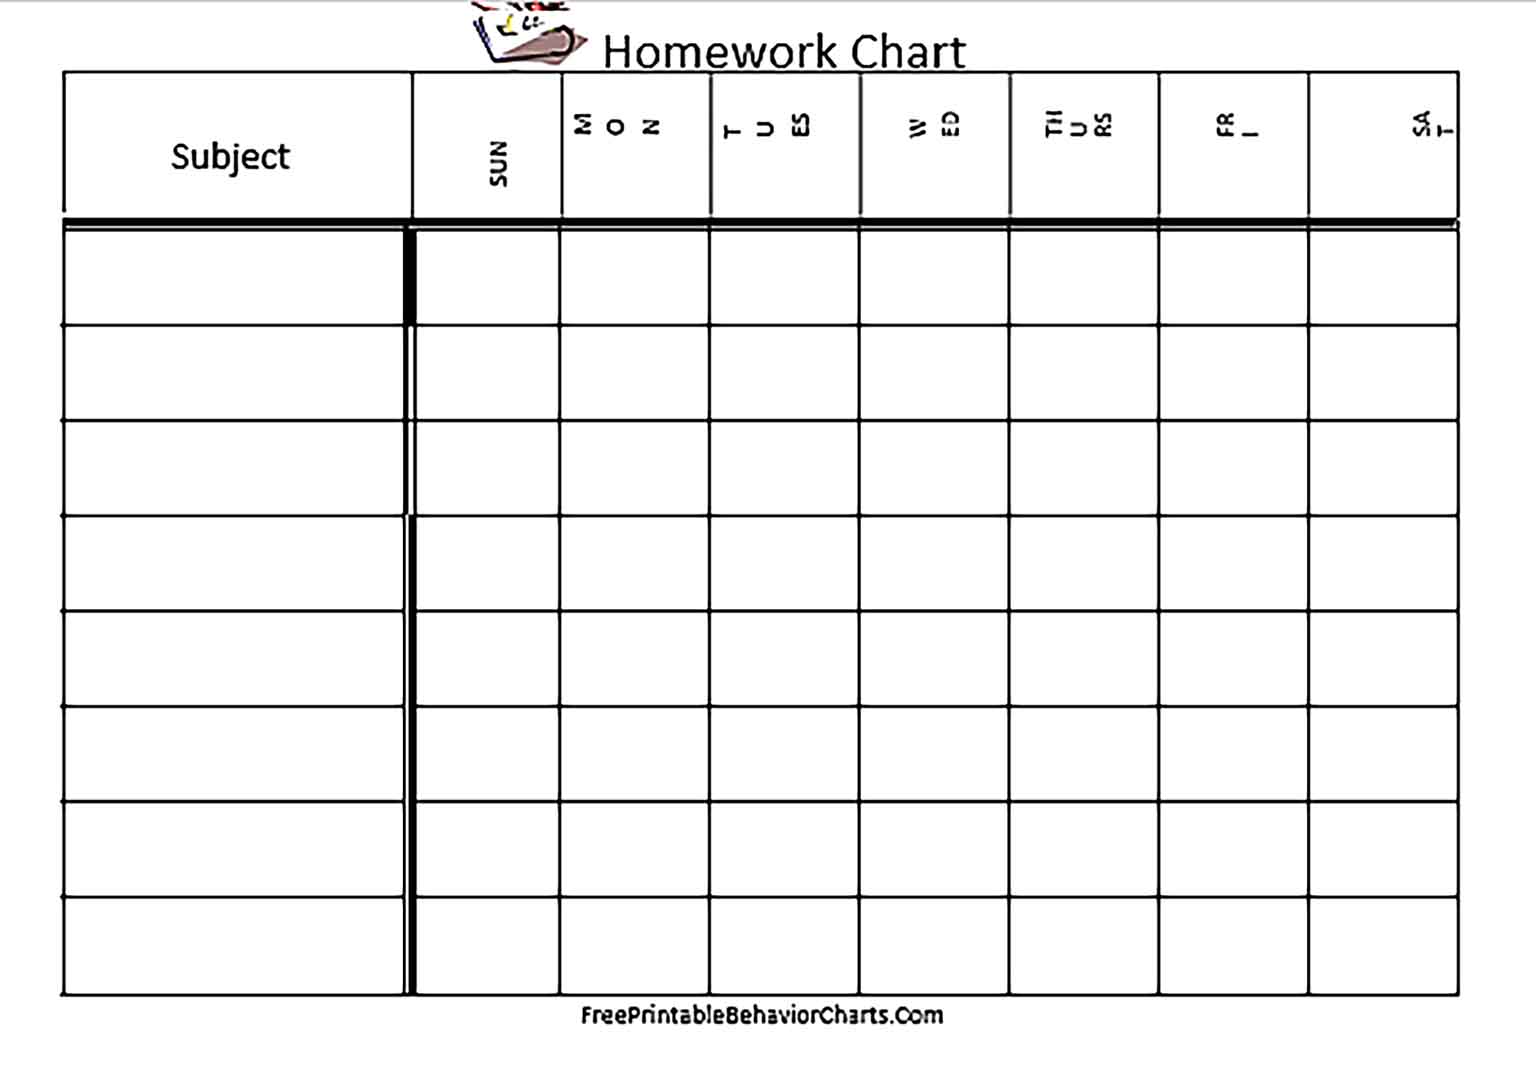 Template homework chart Sample